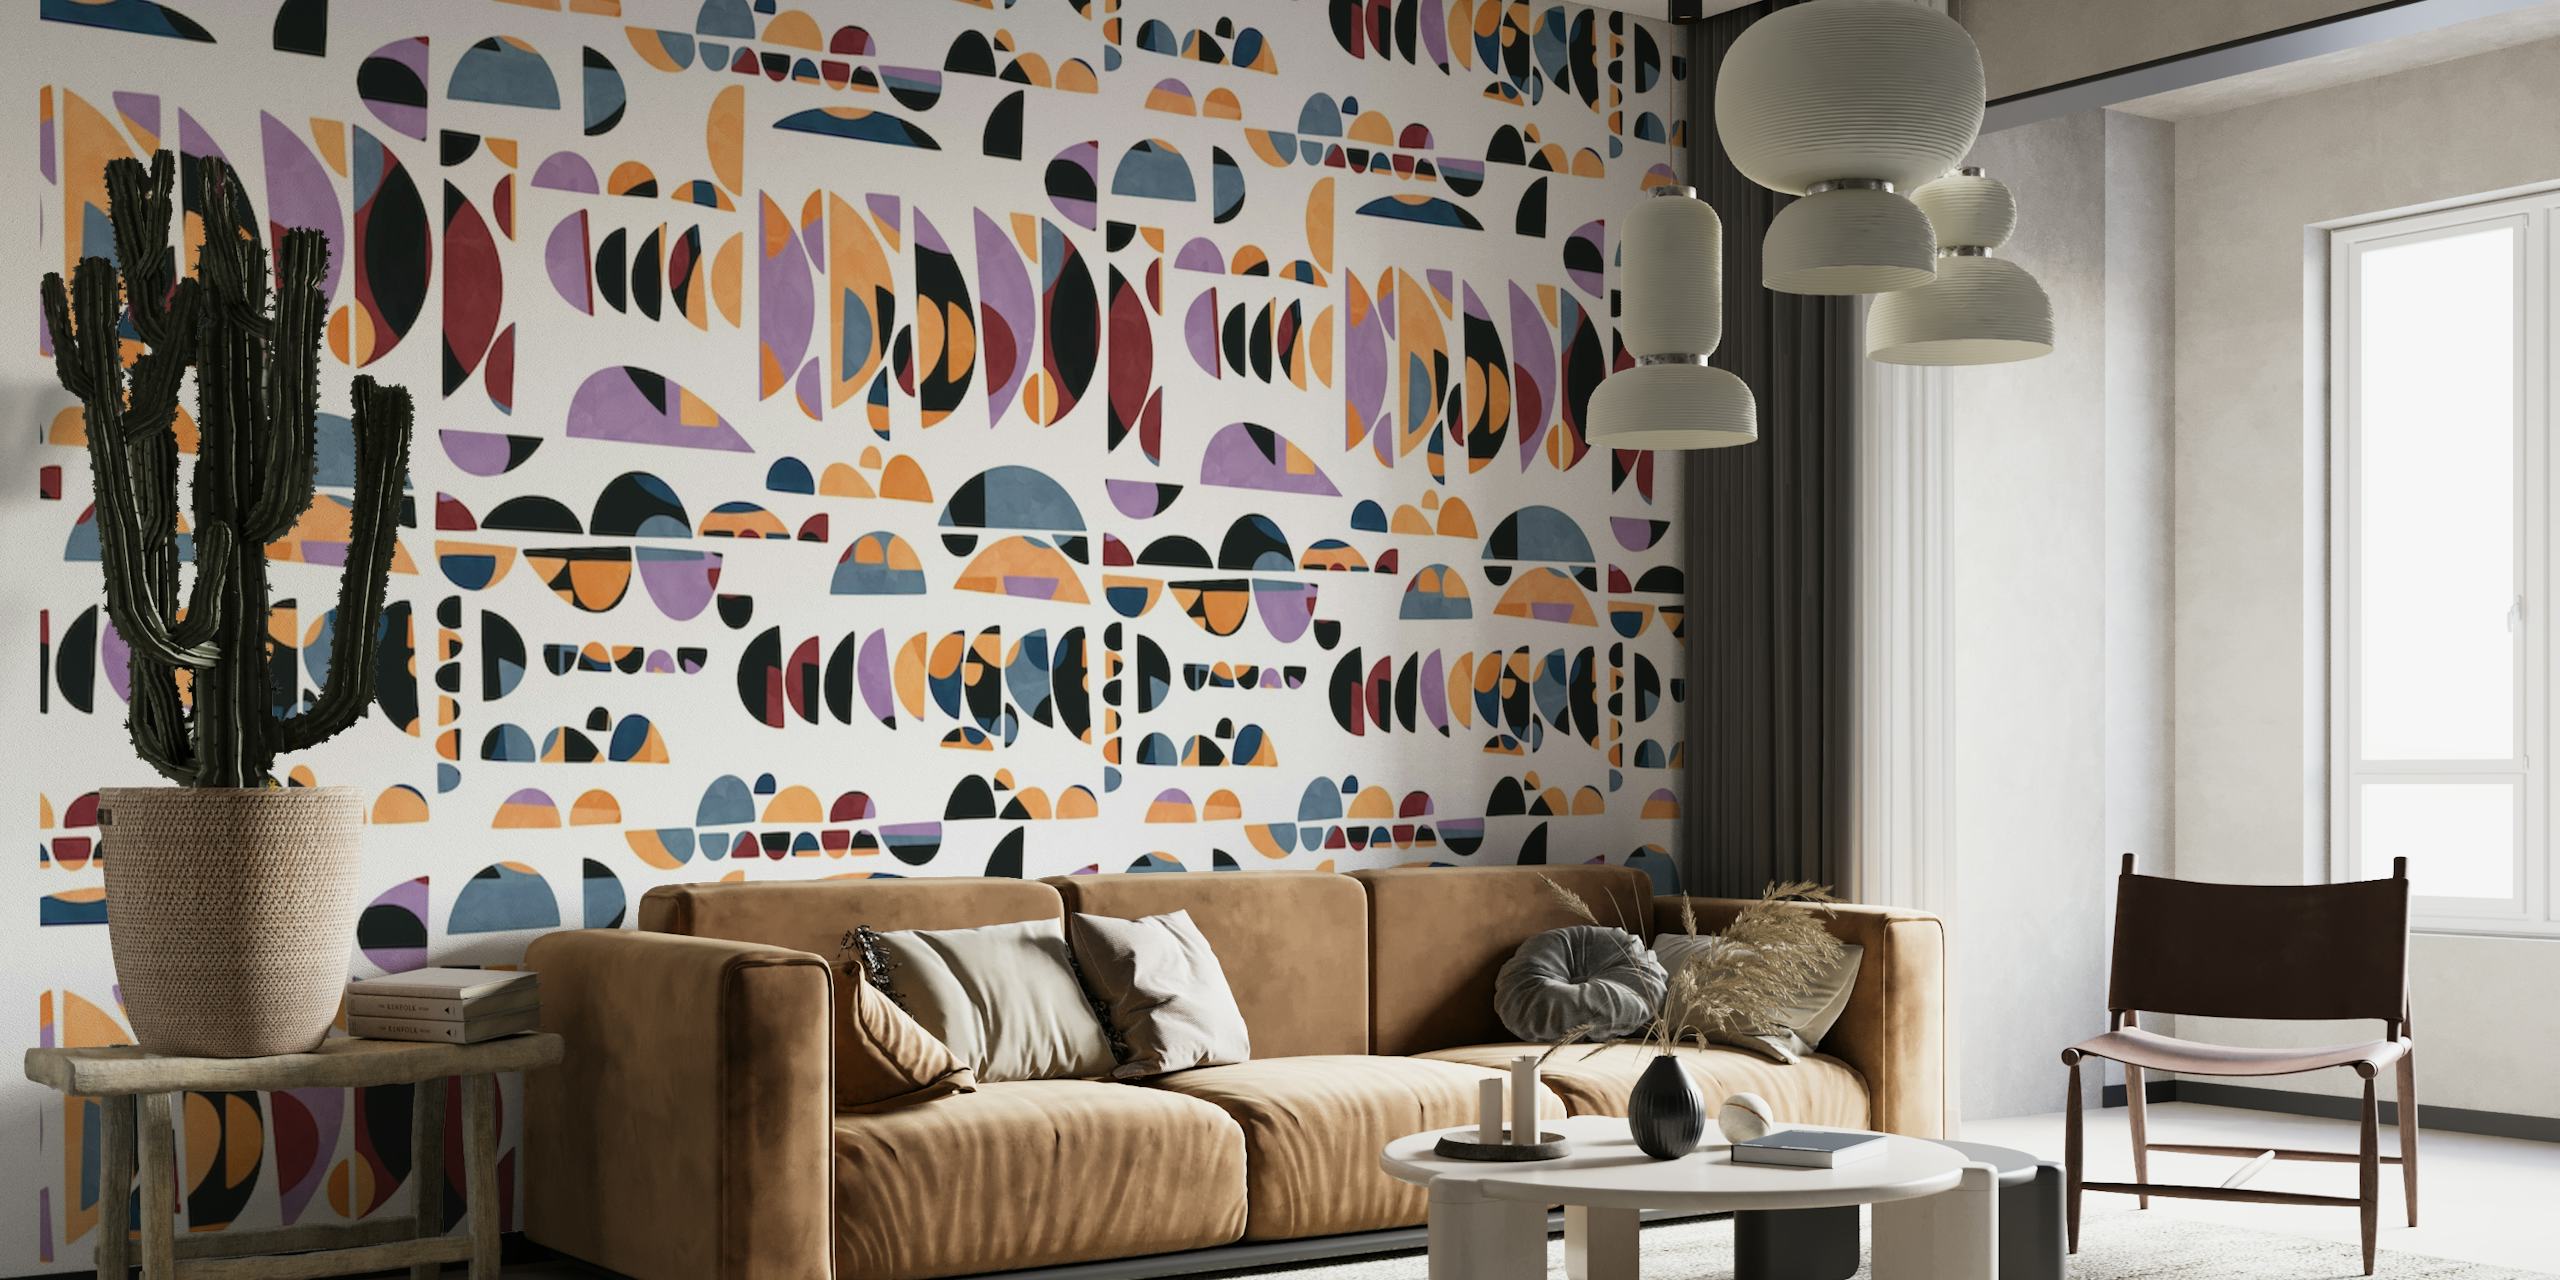 Fotomural vinílico de parede de formas geométricas abstratas em cores pastel